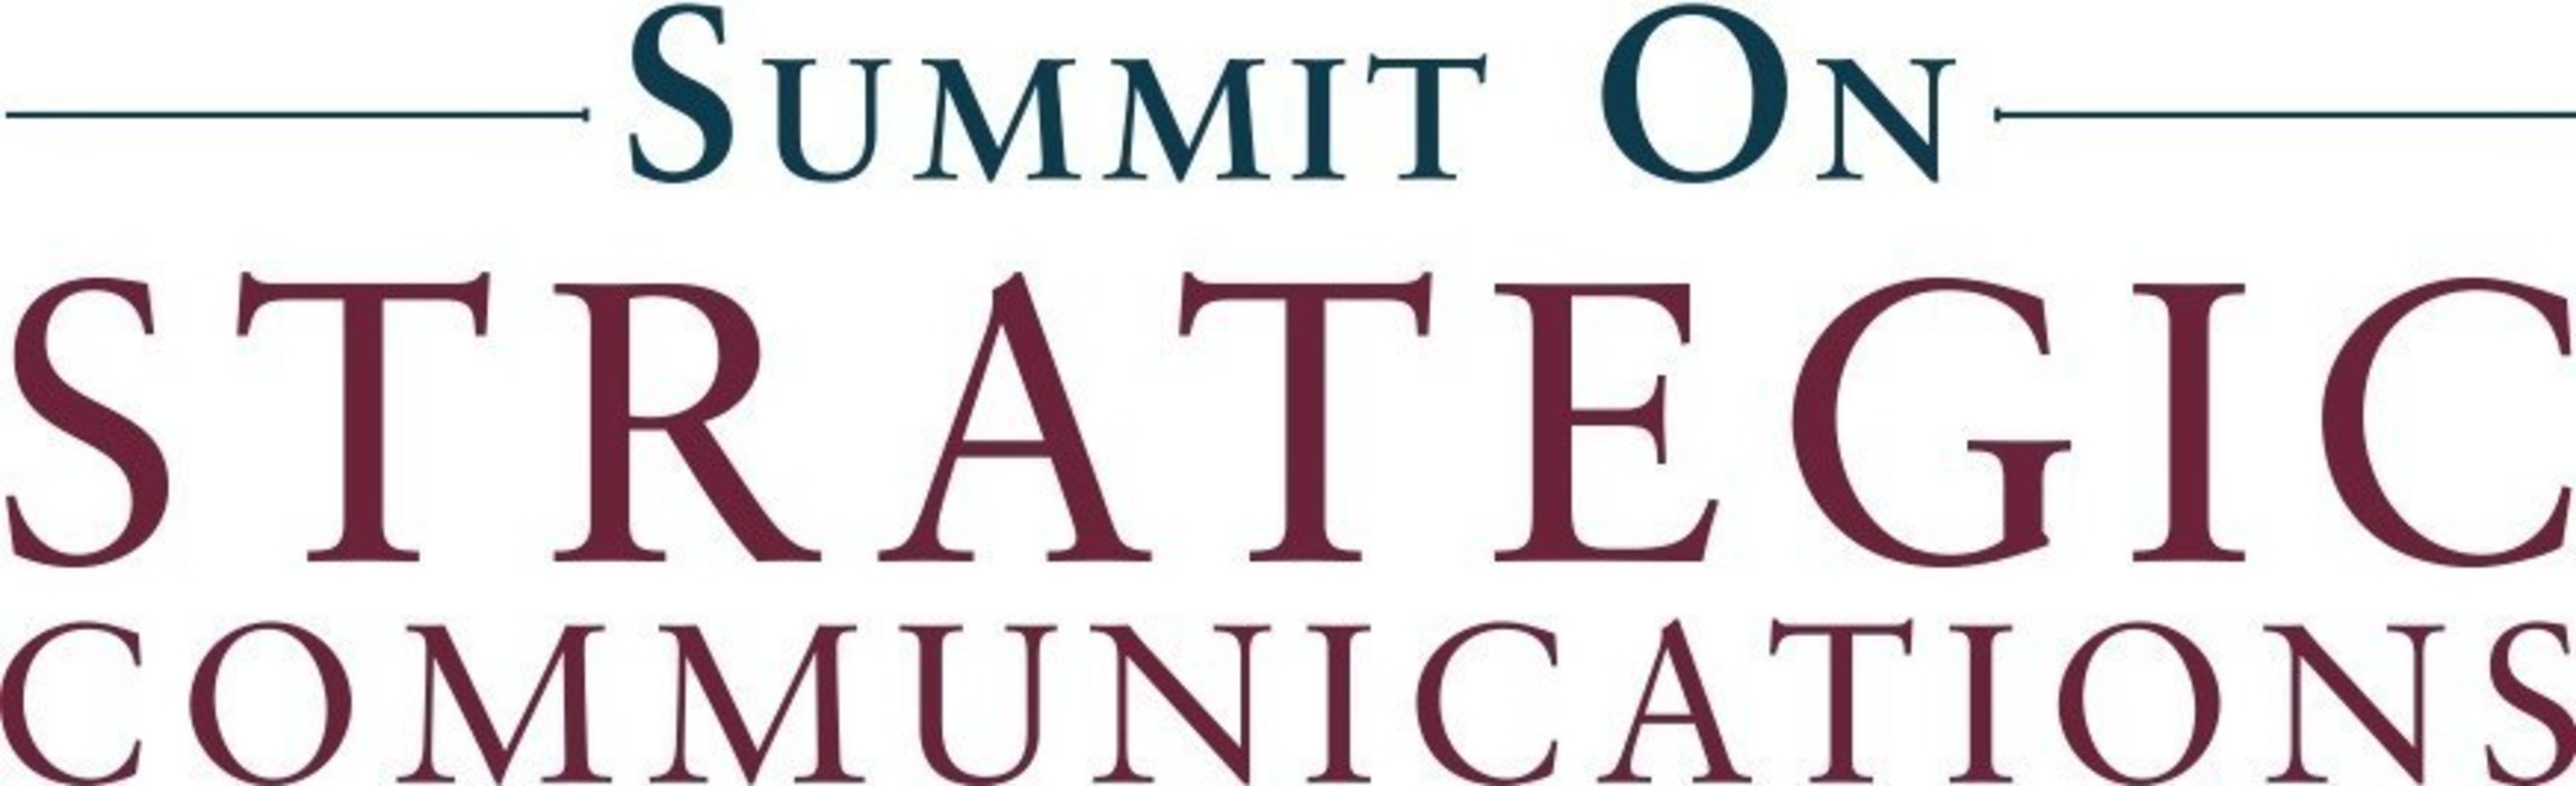 Summit on Strategic Communications